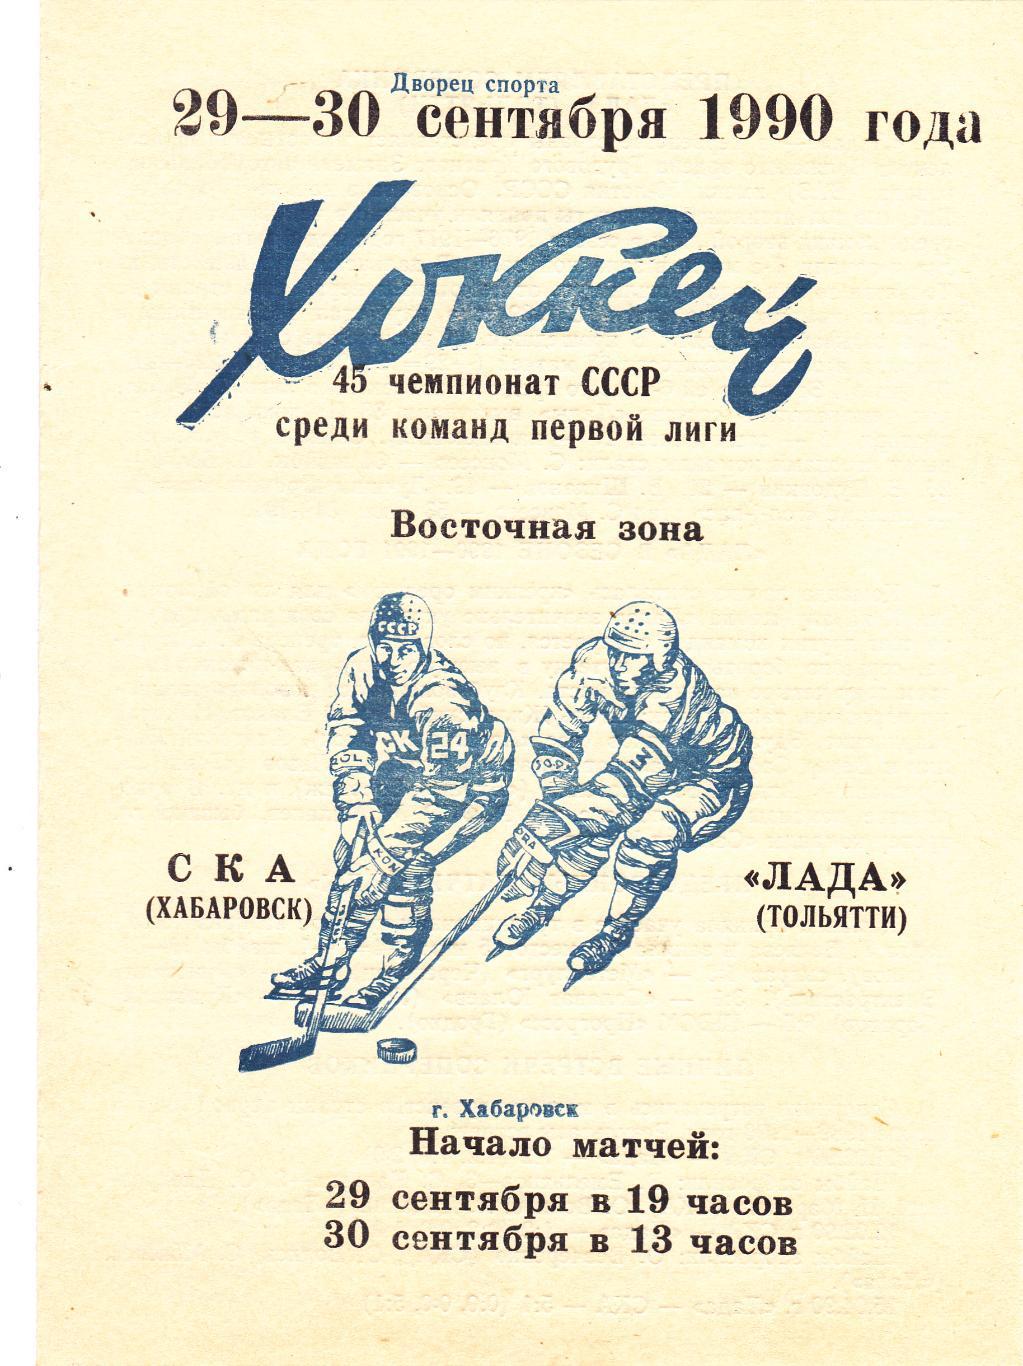 СКА (Хабаровск) - Лада (Тольятти) 29-30.09.1990